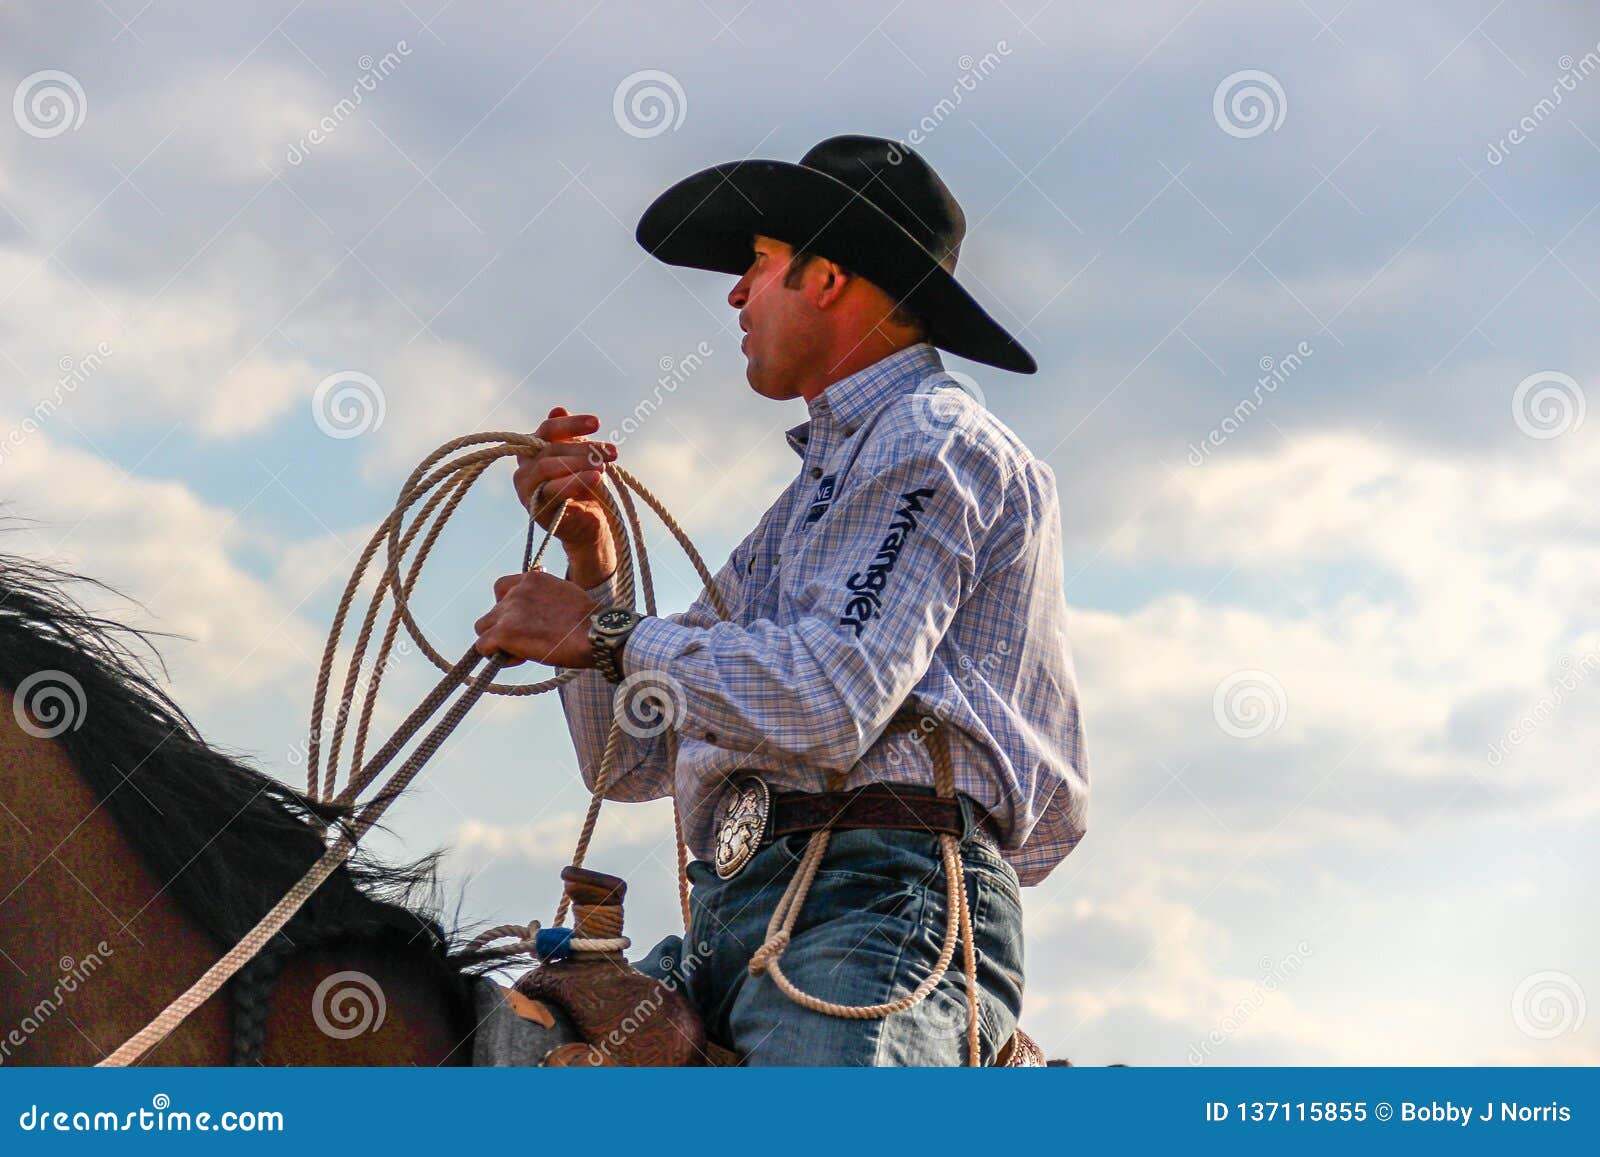 Professional Calf Roper Wearing a Wrangler Shirt and Cowboy Hat Editorial  Image - Image of texas, farm: 137115855